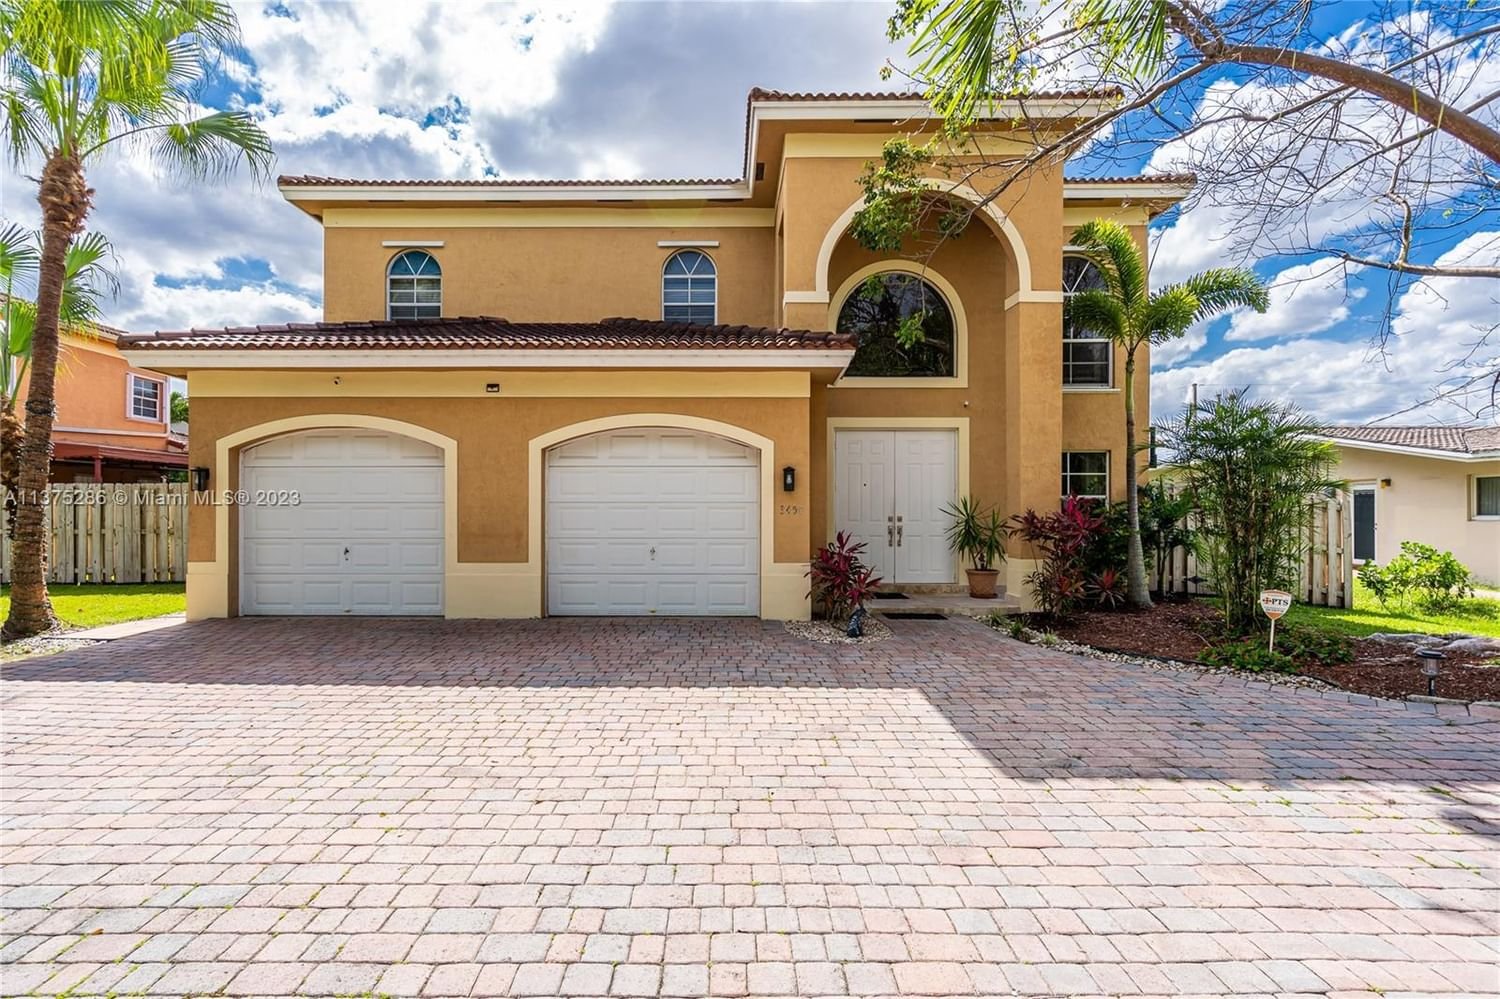 Real estate property located at 3450 97th Ave, Miami-Dade County, Miami, FL